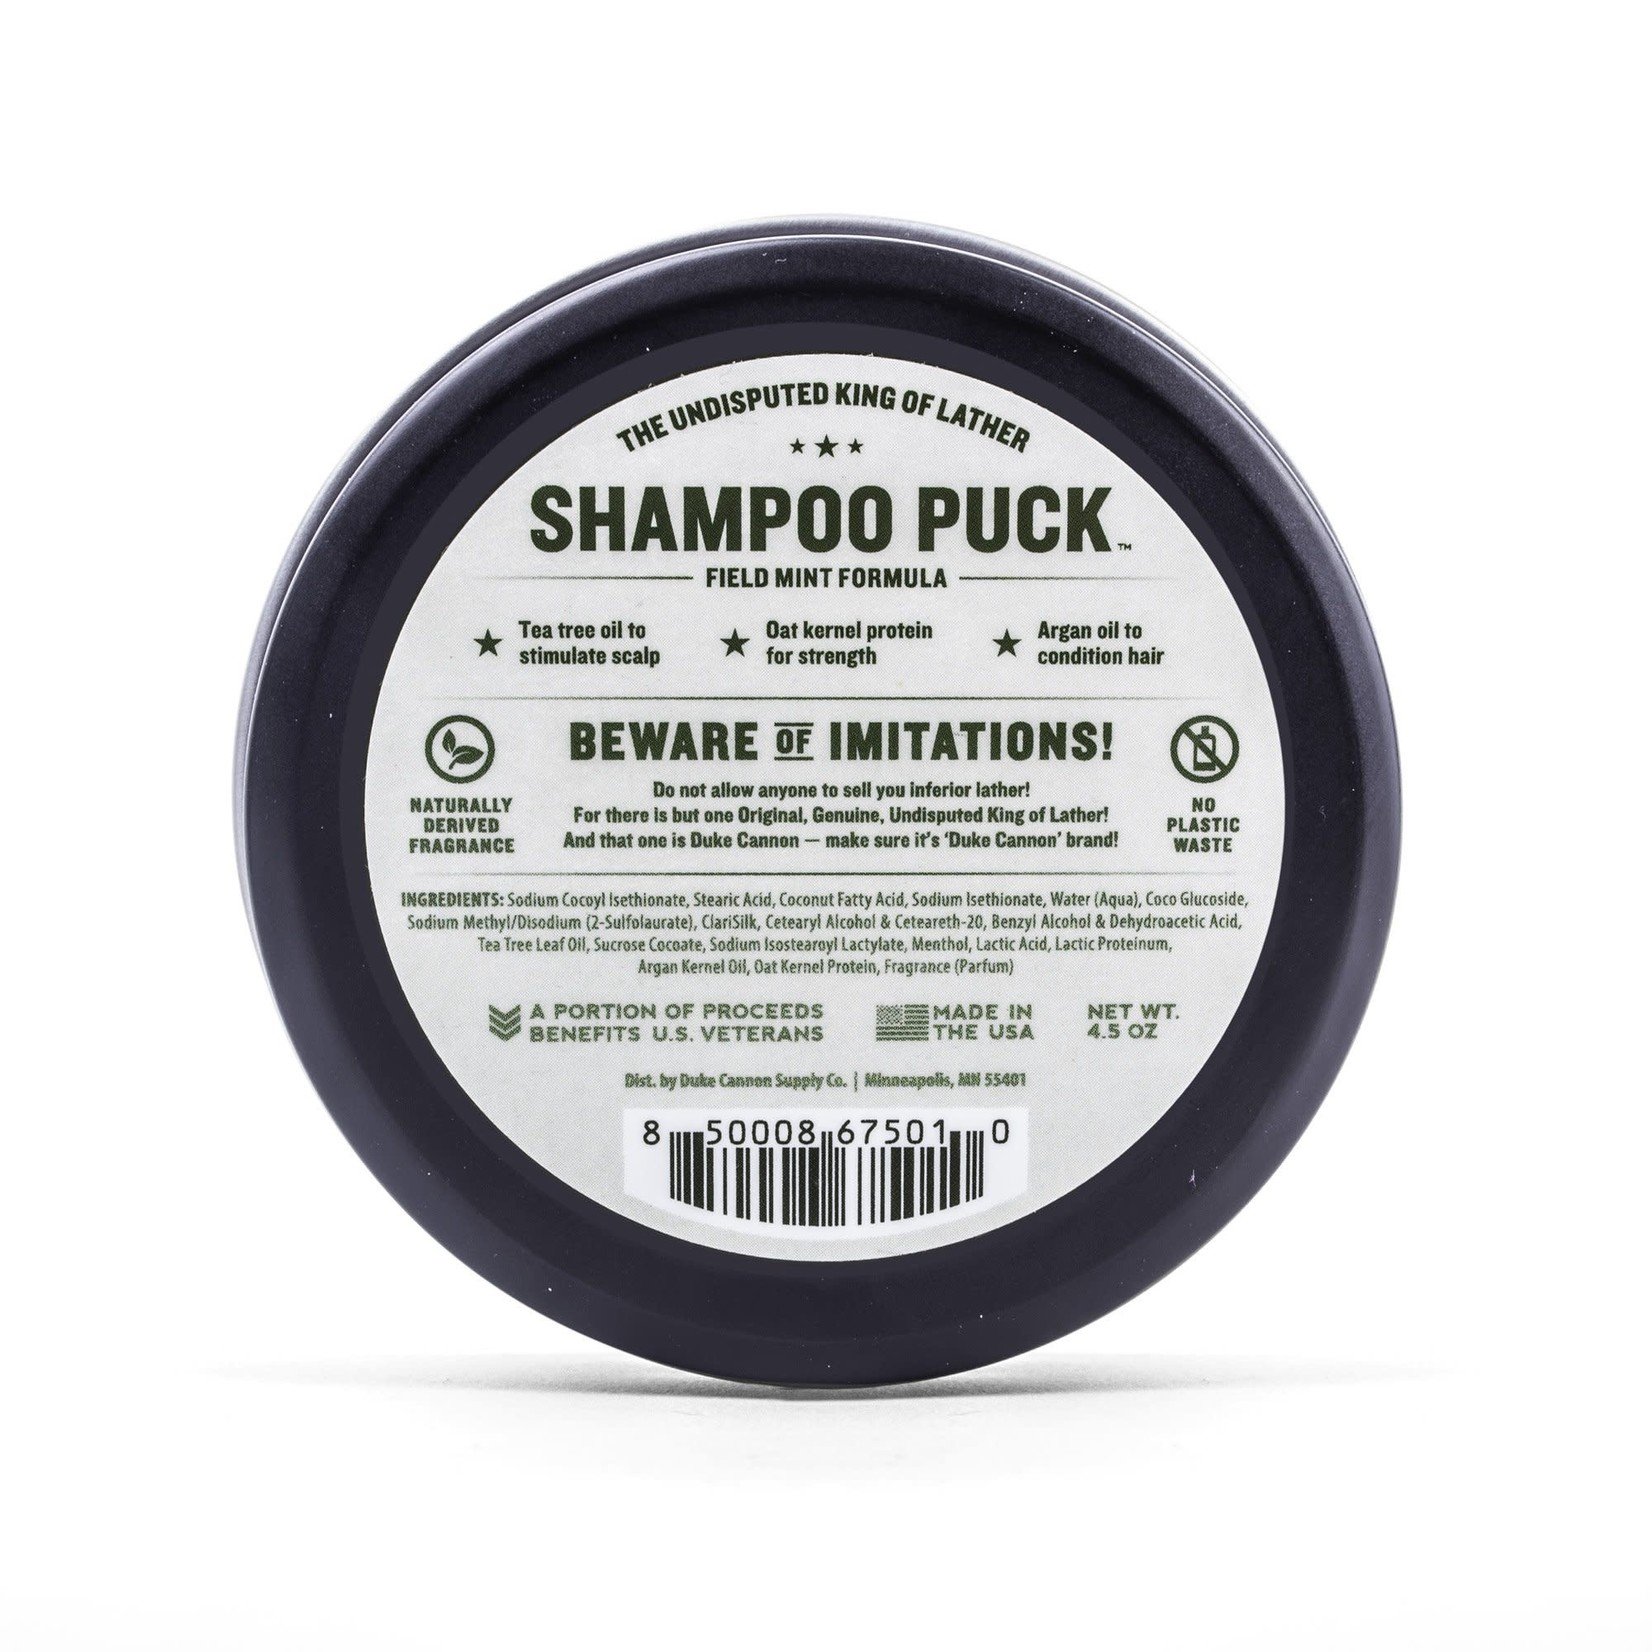 Duke Cannon Supply Co Shampoo Puck - Field Mint